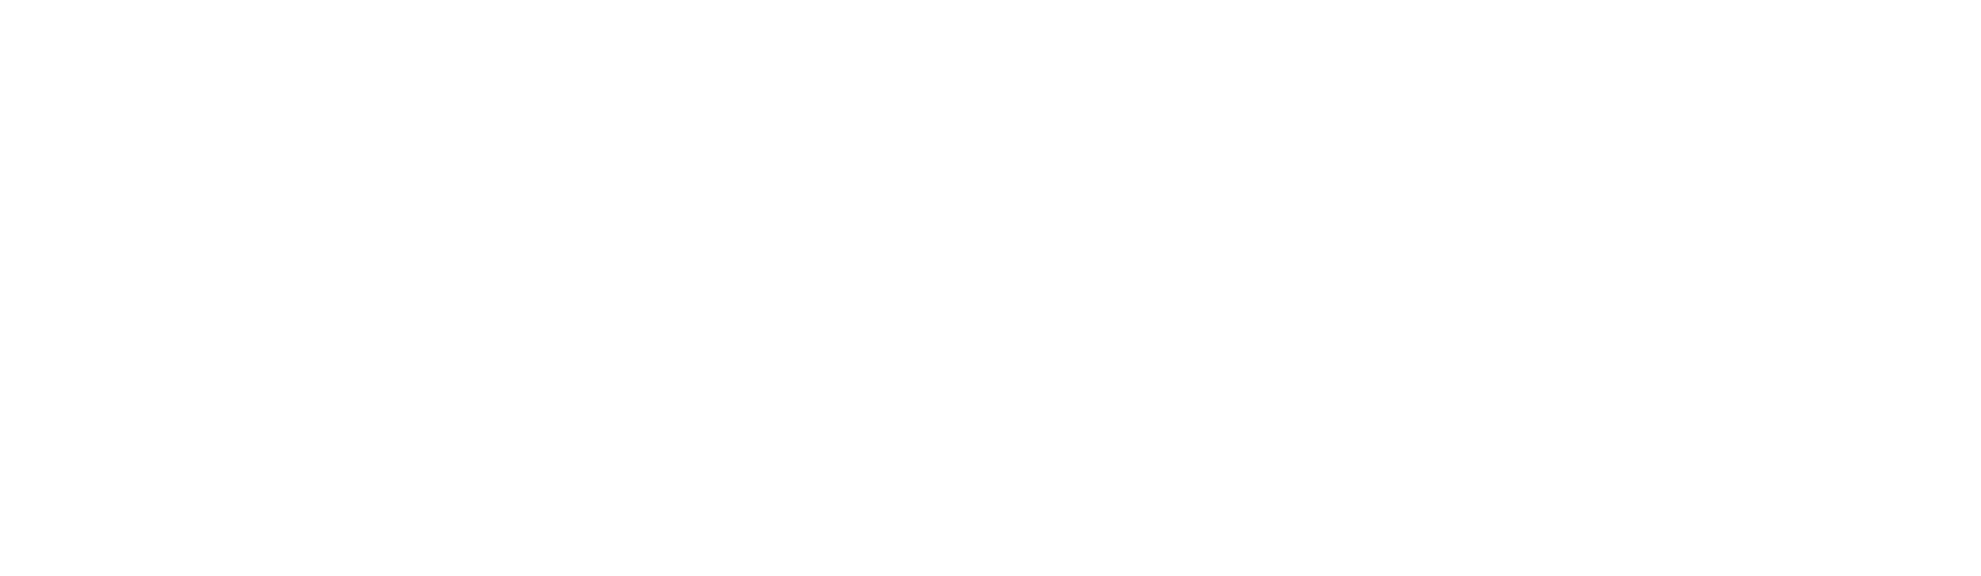 malta government sustainability logo